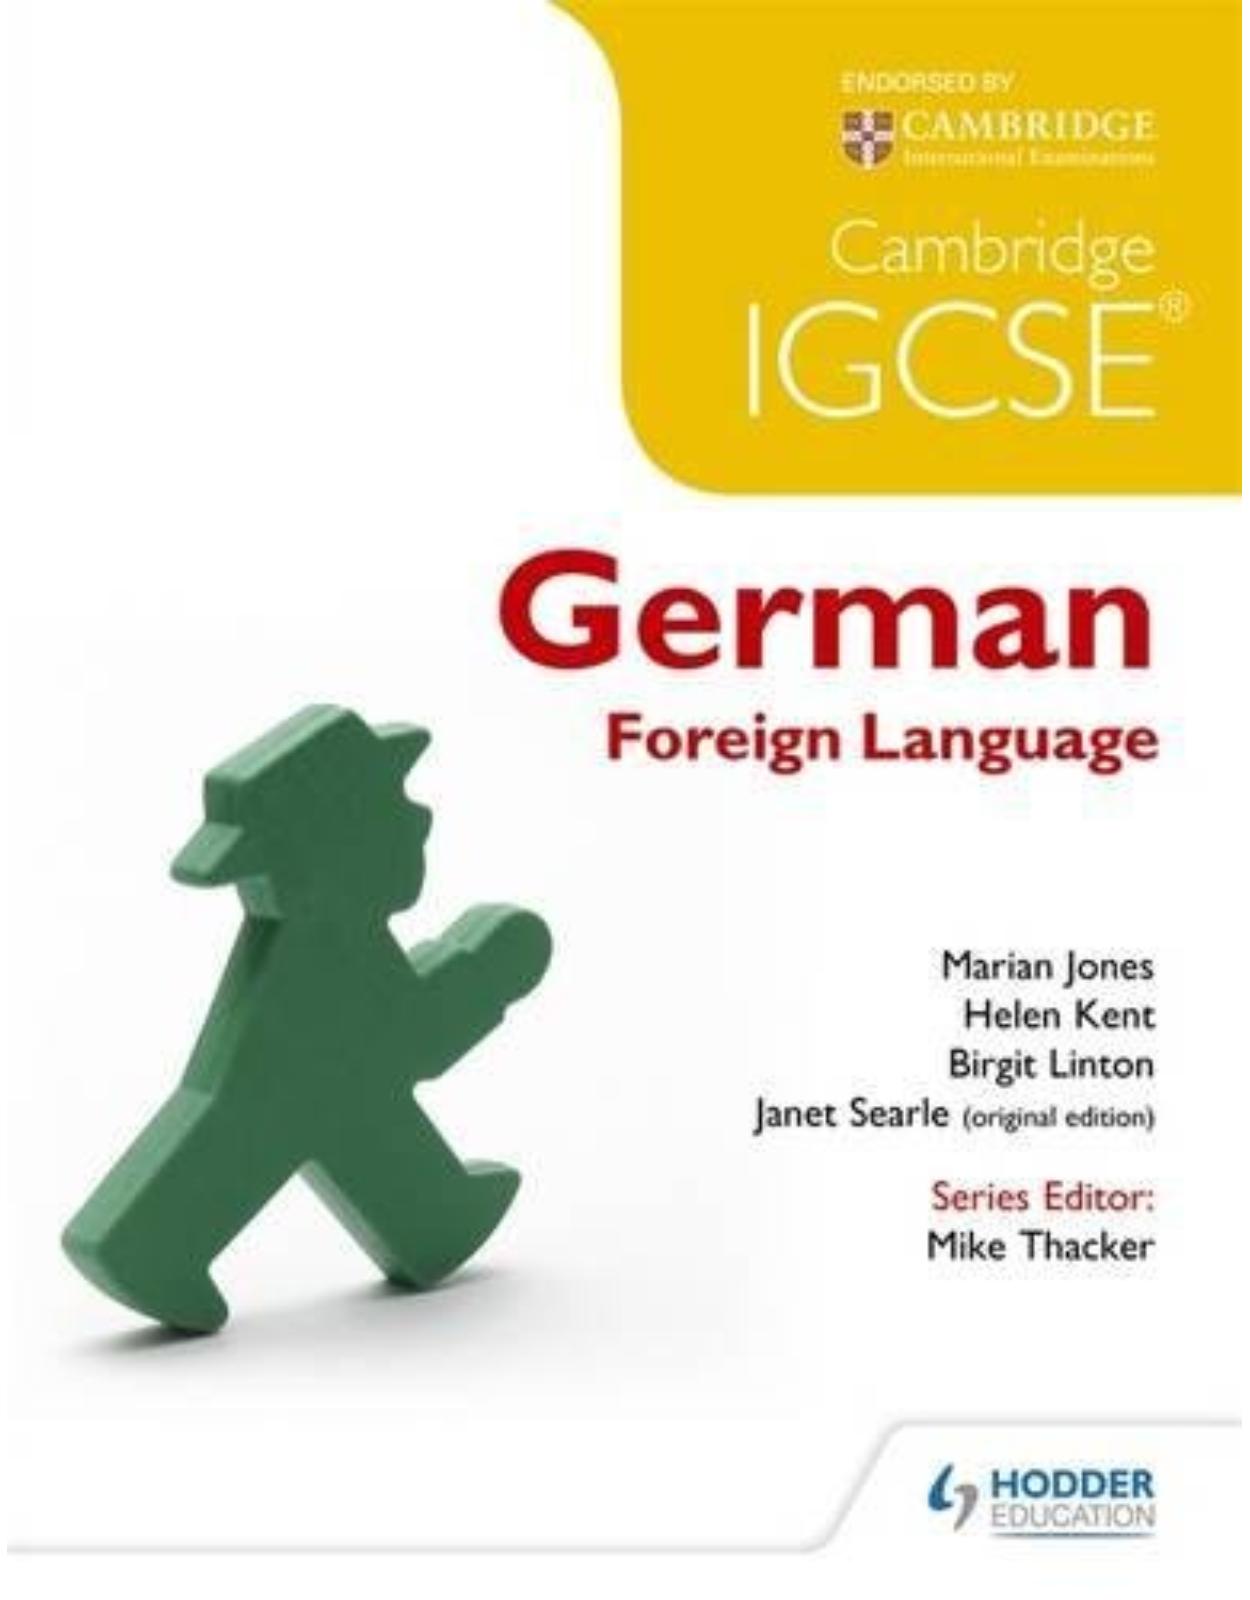 Cambridge IGCSE® German Foreign Language